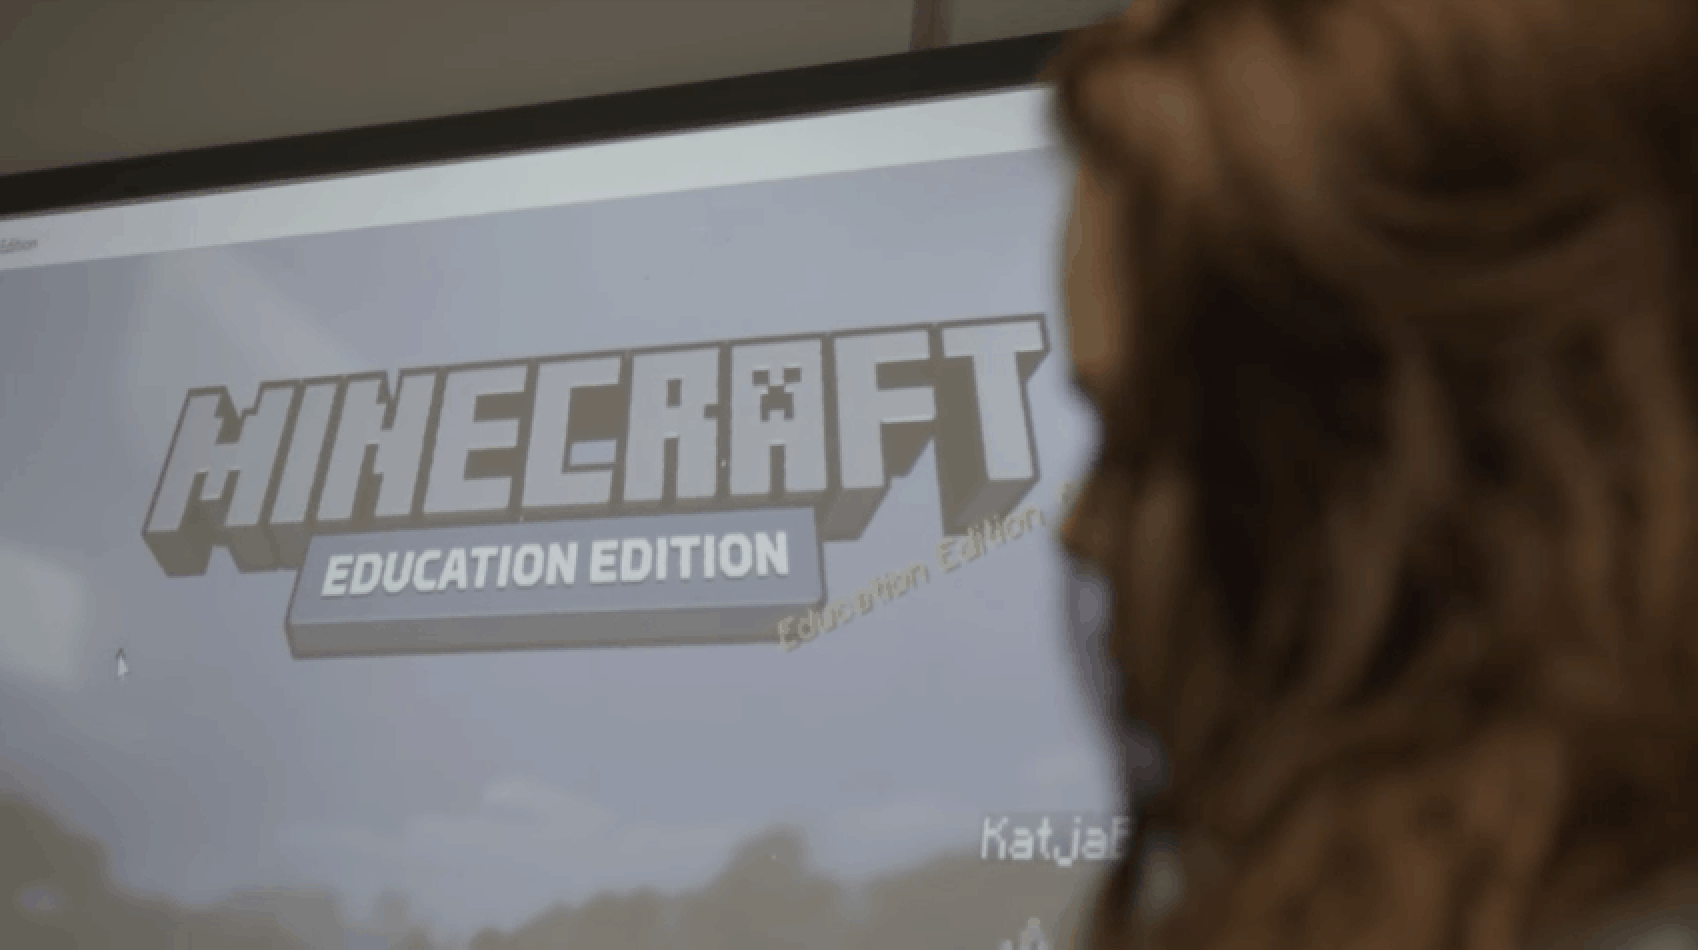 Minecraft: Education Edition now boasts 2 million users - OnMSFT.com - November 14, 2017